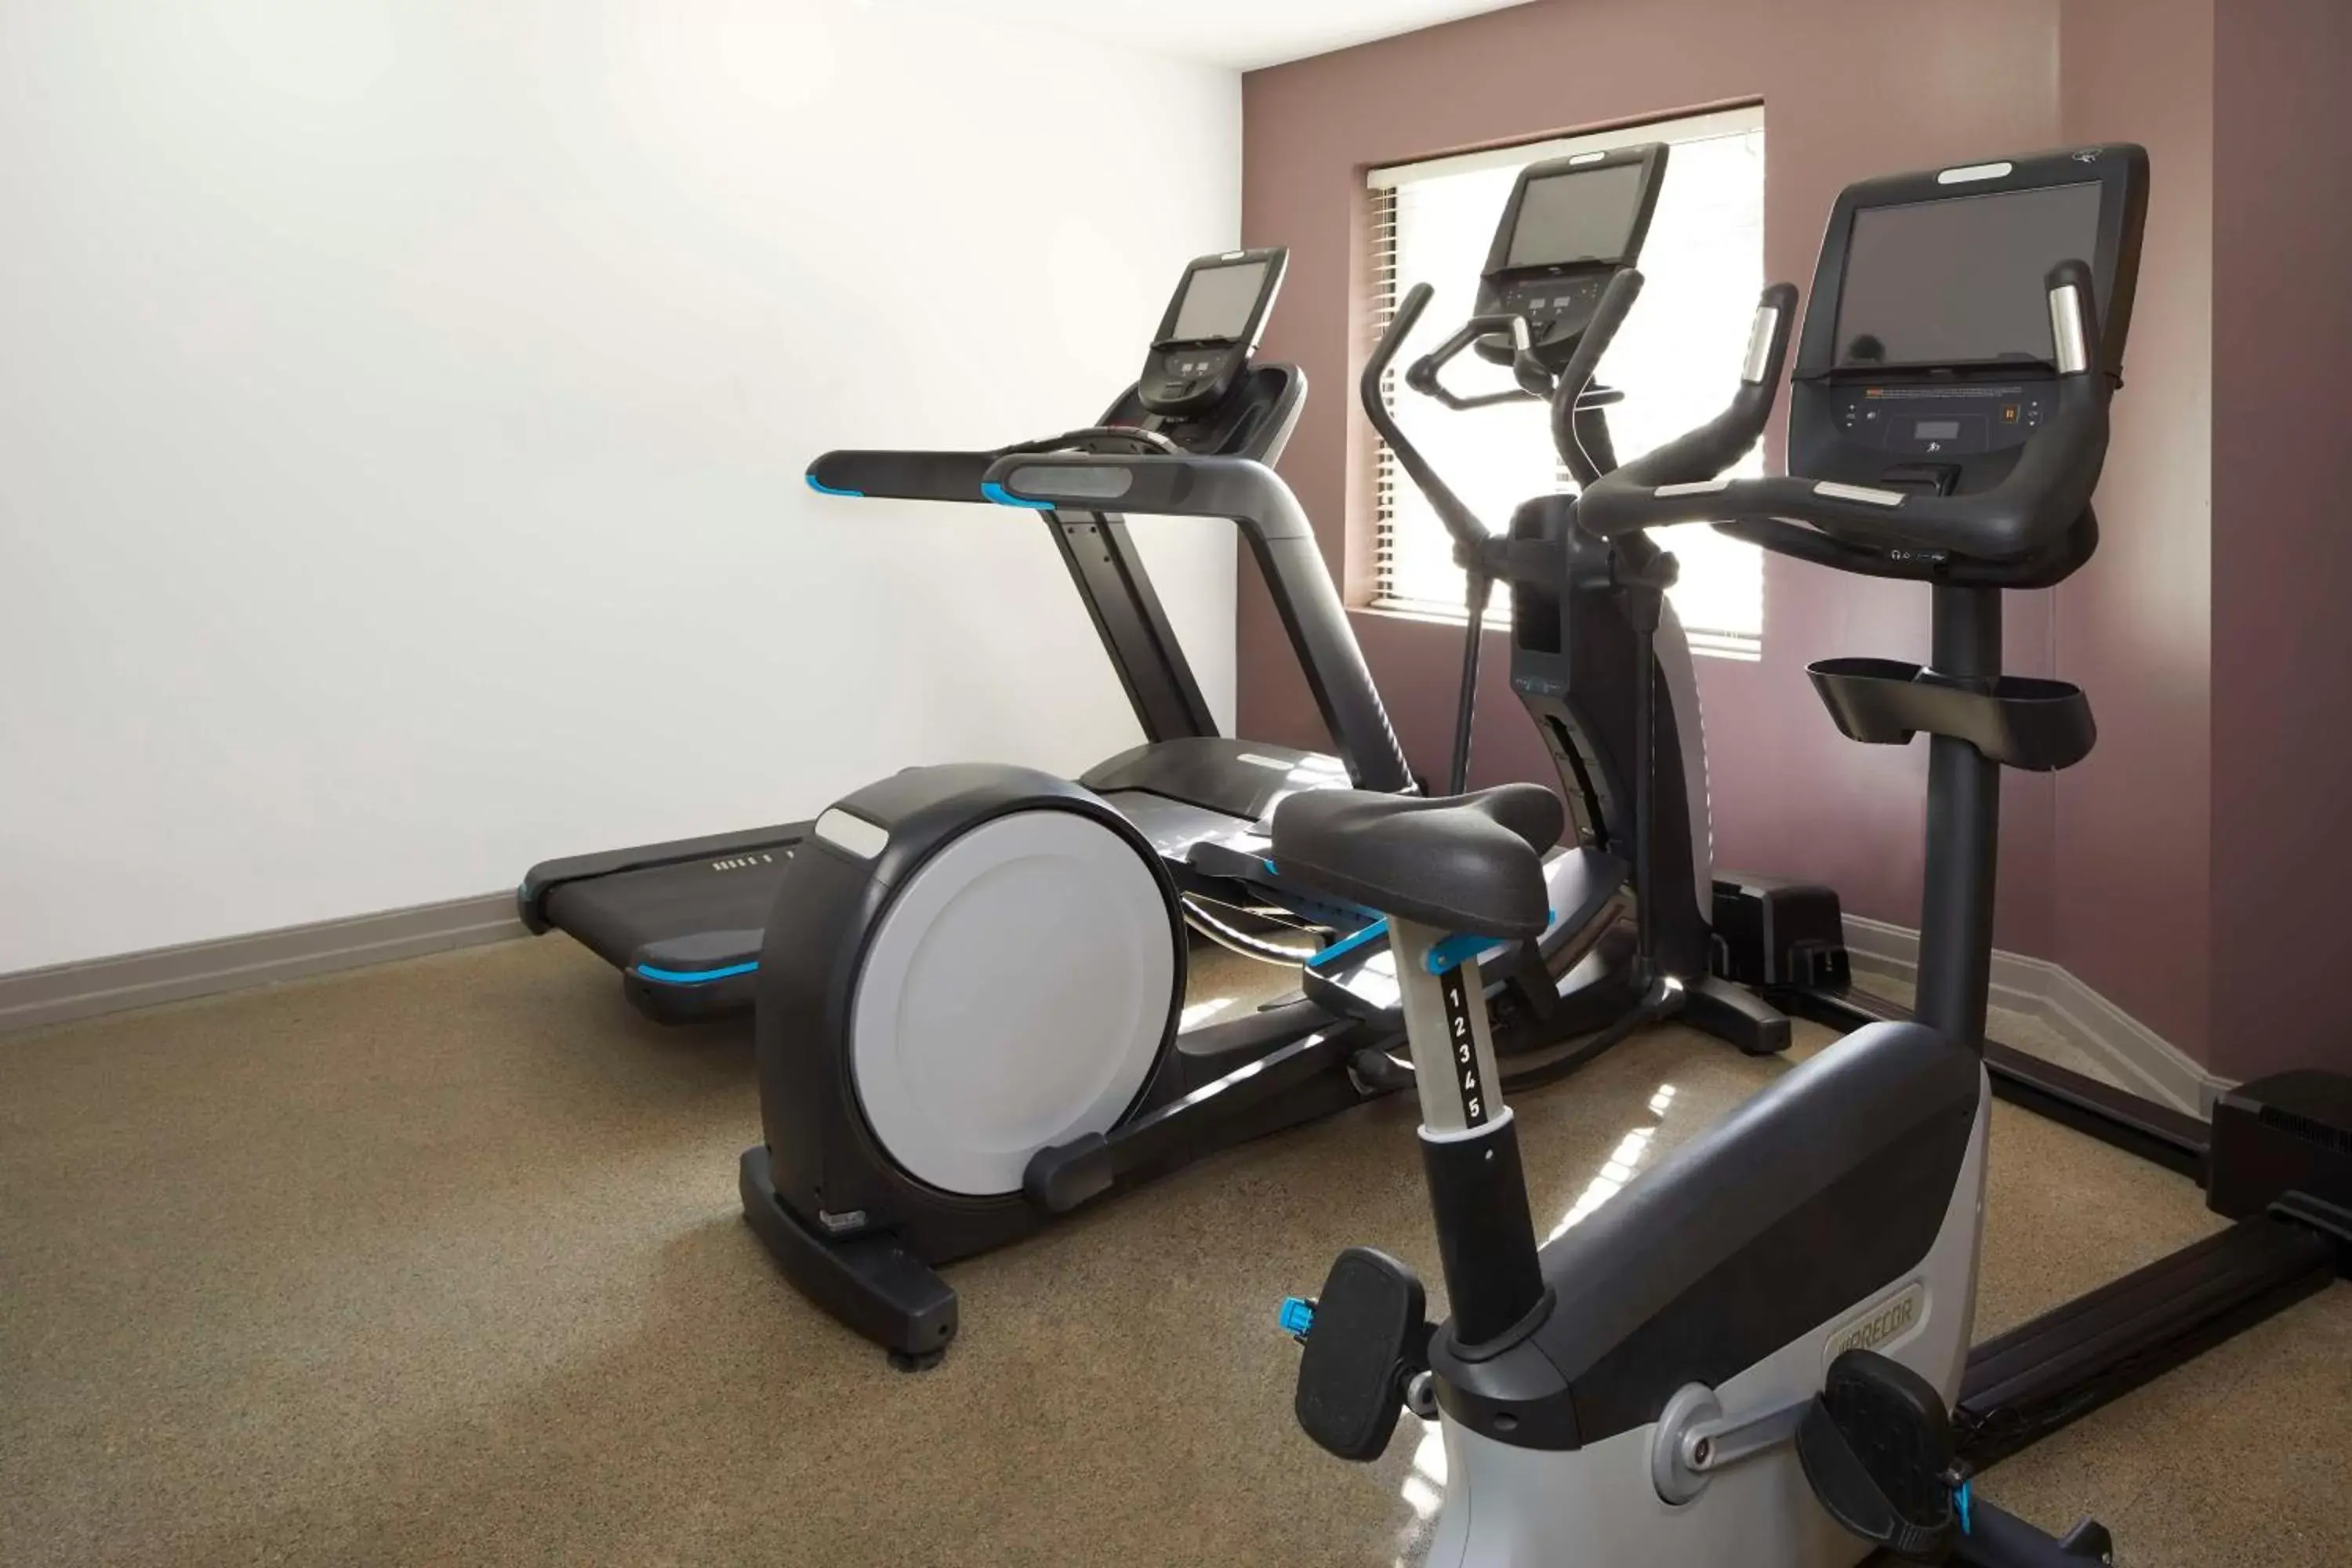 Fitness centre/facilities, Fitness Center/Facilities in DoubleTree by Hilton Atlanta Alpharetta-Windward